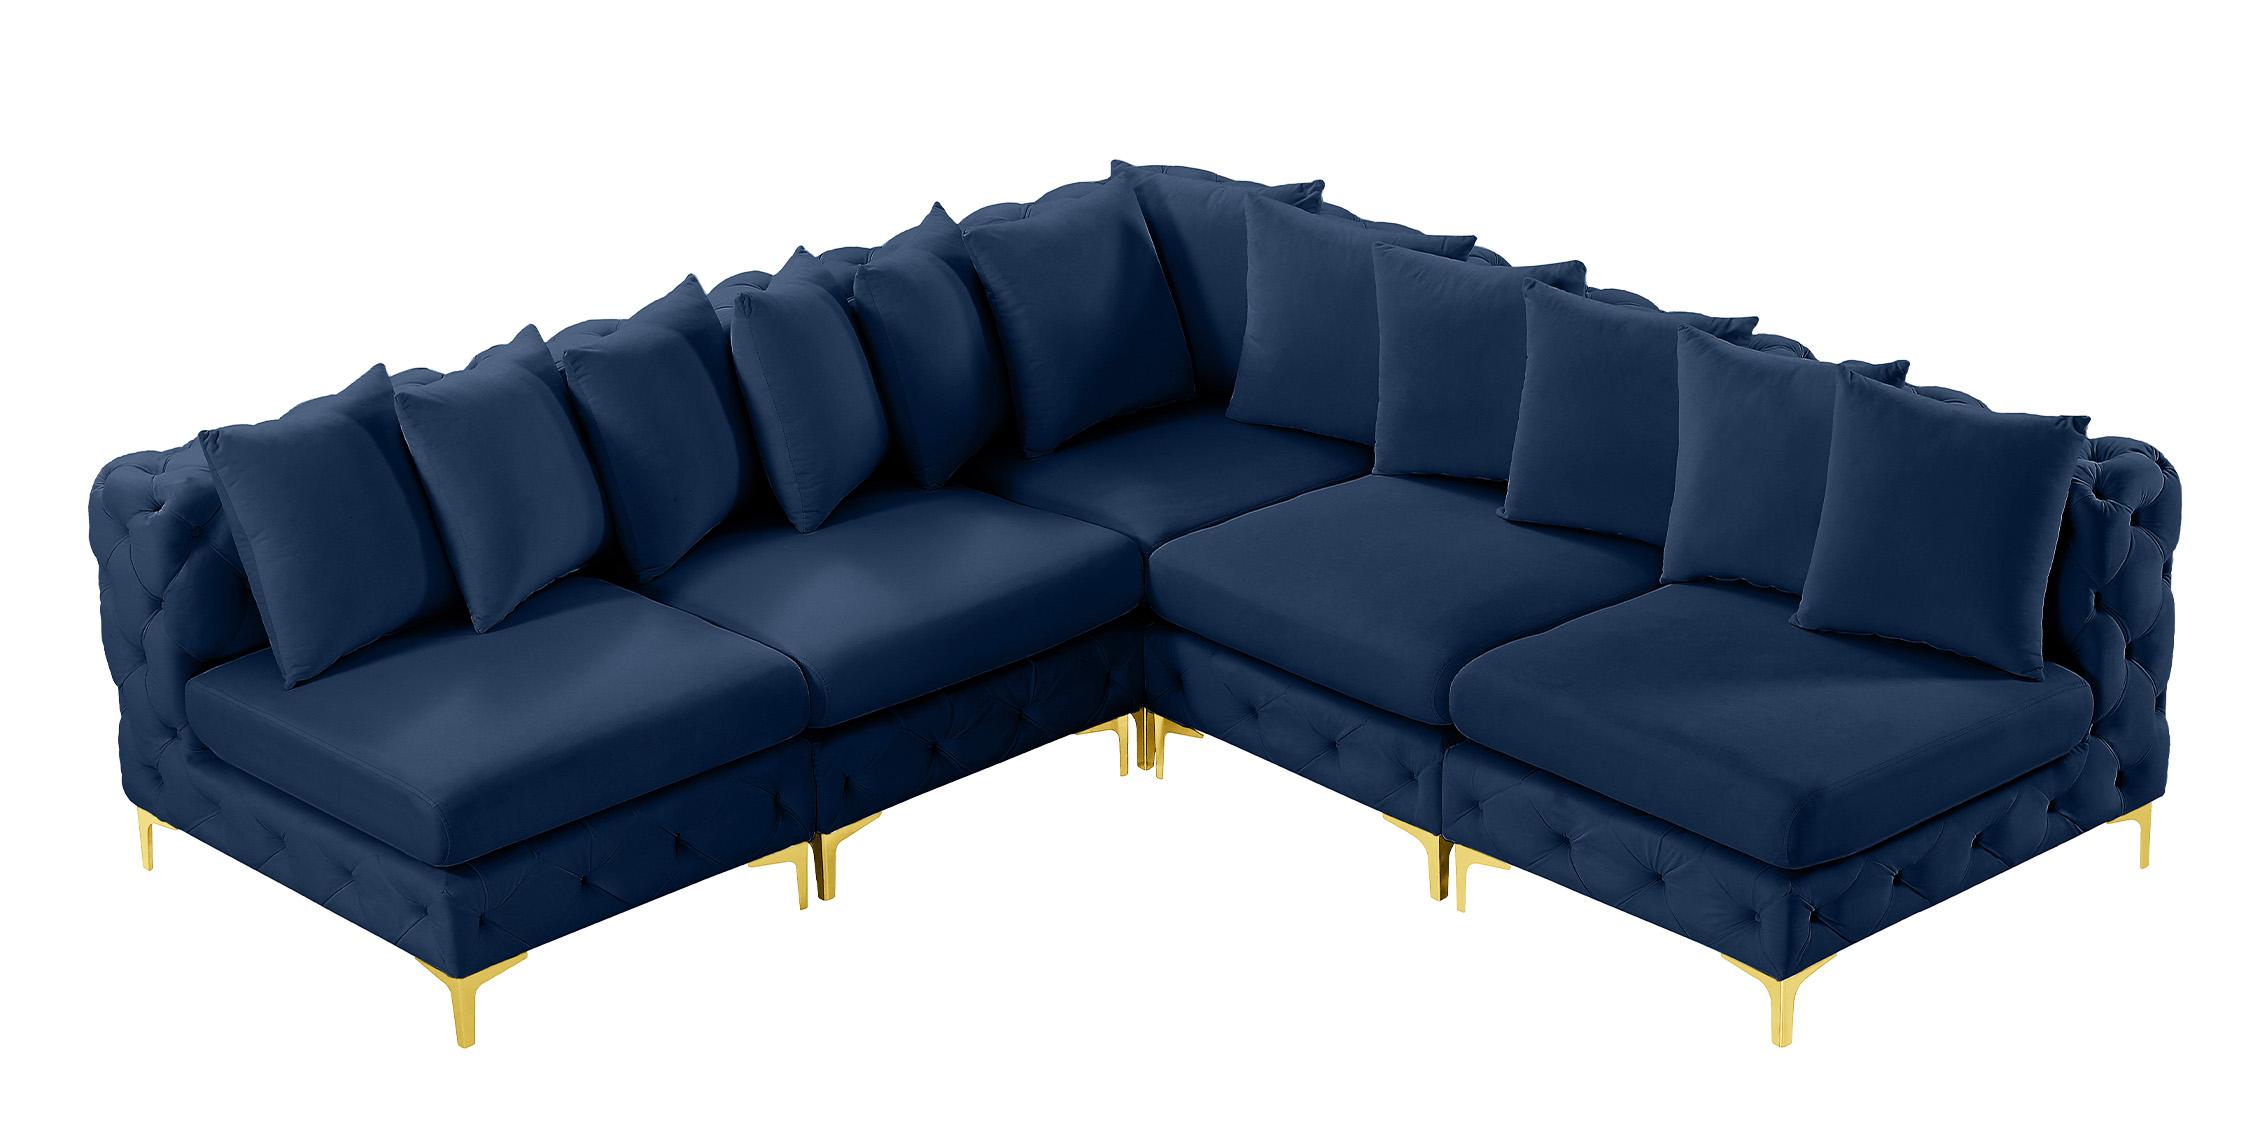 

    
Meridian Furniture TREMBLAY 686Navy-Sec5B Modular Sectional Sofa Navy 686Navy-Sec5B
